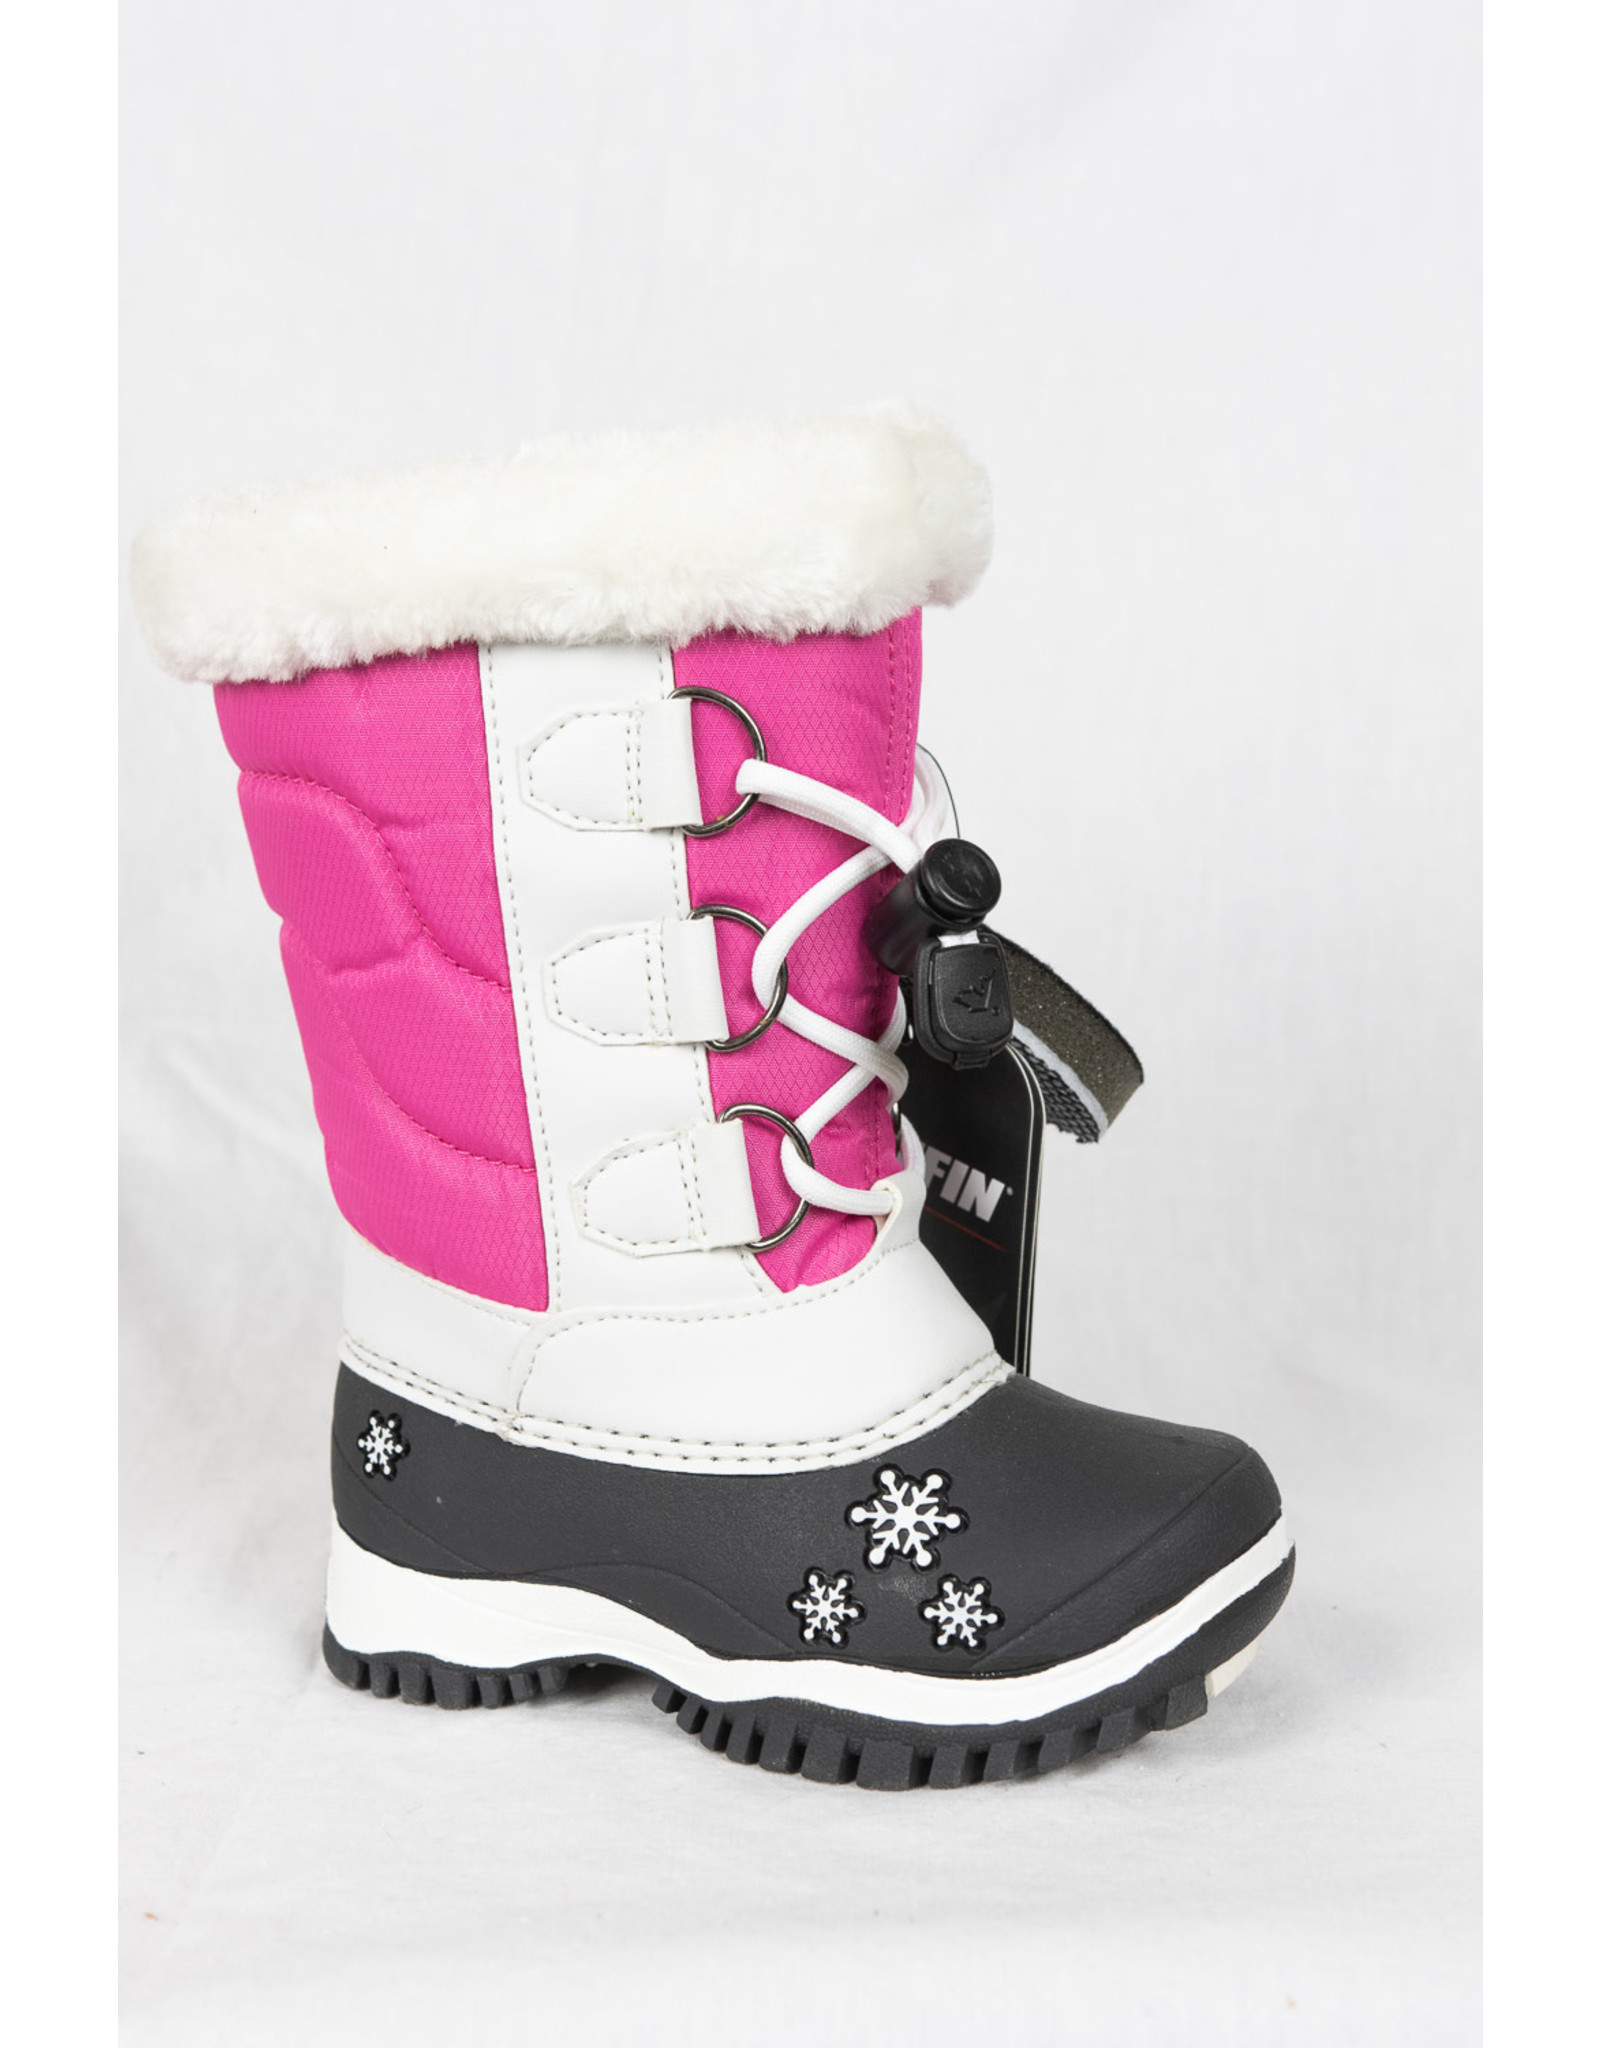 Baffin Children's Boots Ava White and 